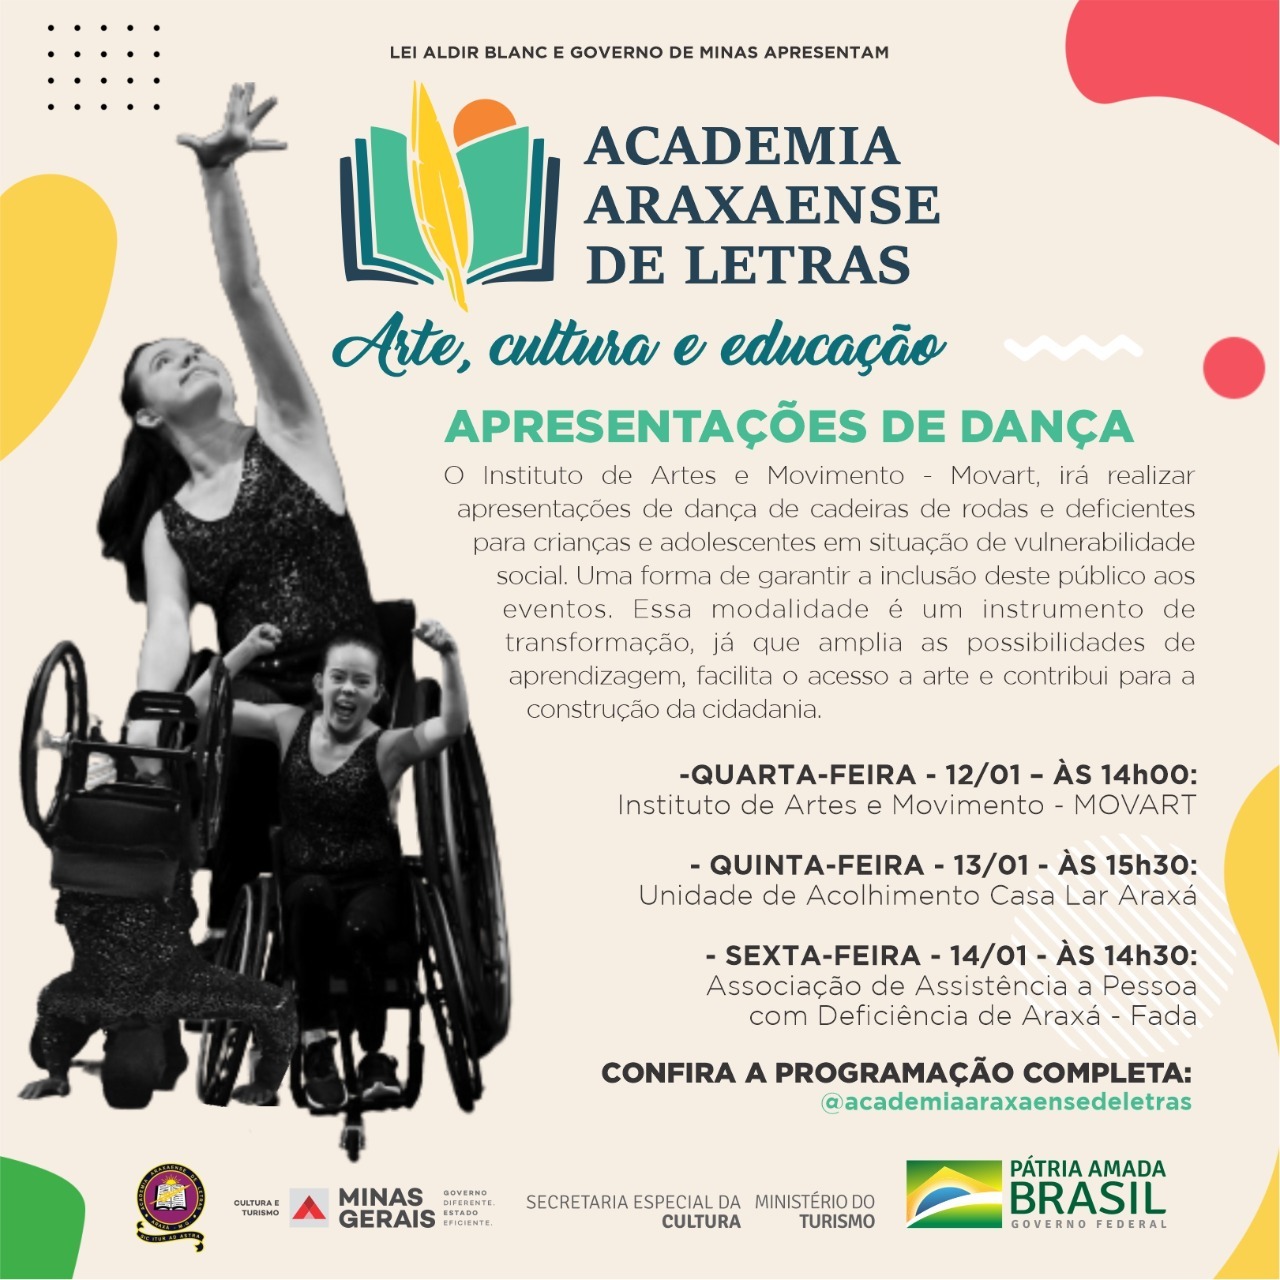 Academia Araxaense de Letras retoma atividades culturais pela Lei Aldir Blanc esta semana